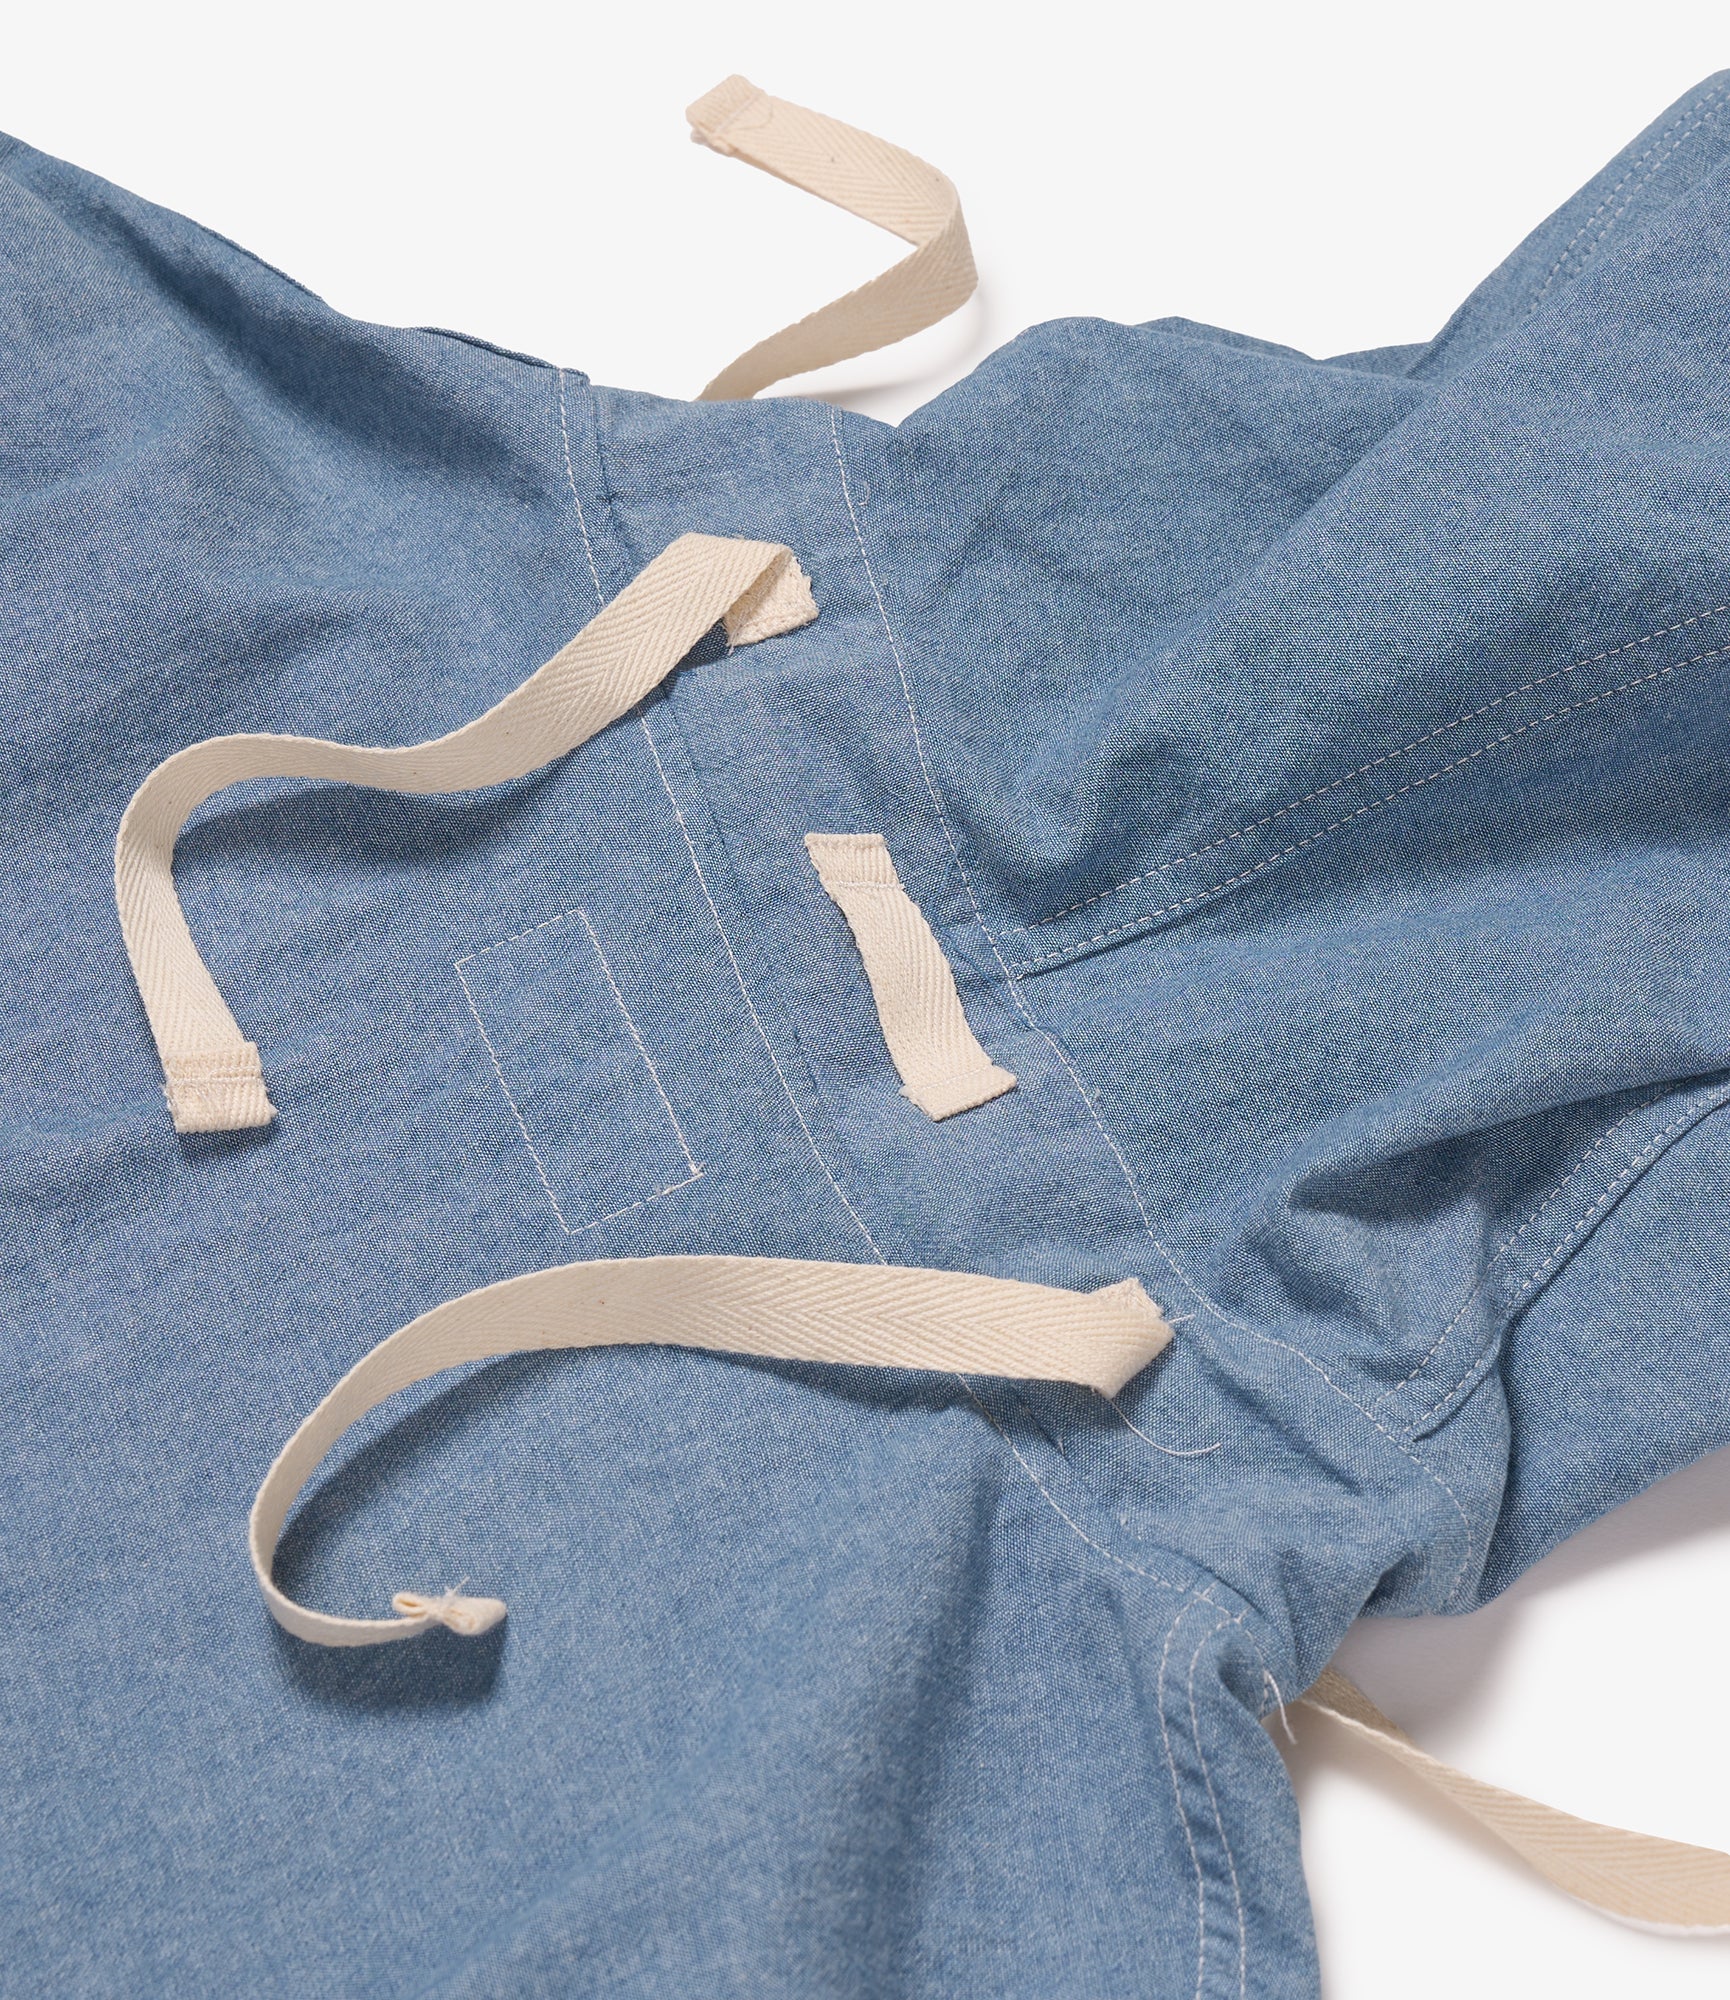 Engineered Garments Workaday Salvage Smock – Lt.Blue 4.5oz Cotton Chambray